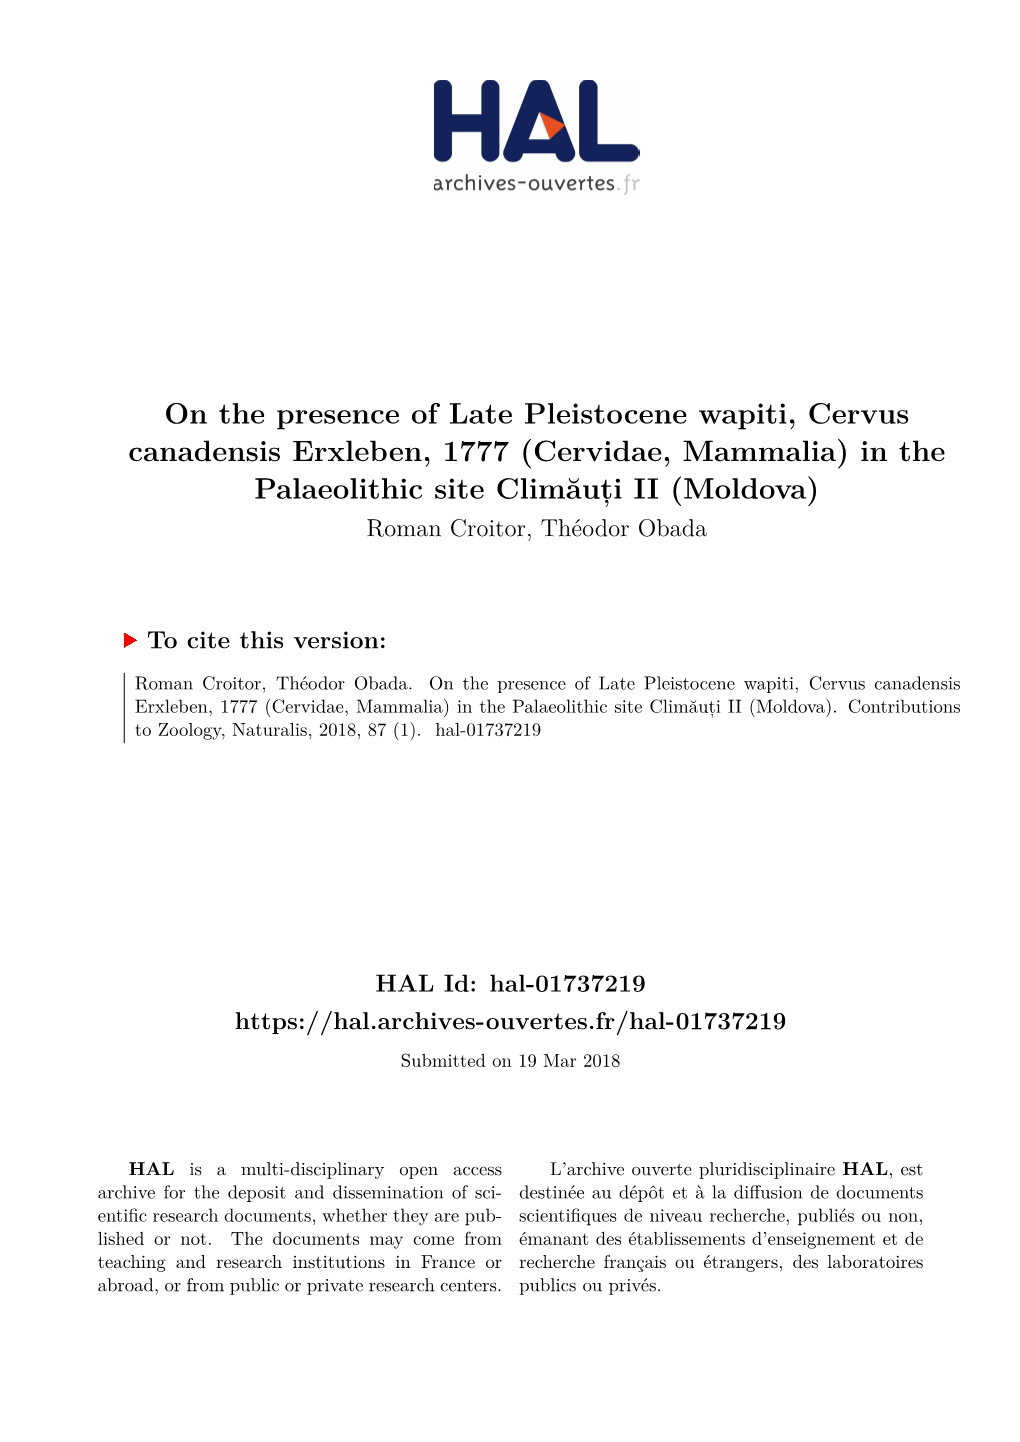 On the Presence of Late Pleistocene Wapiti